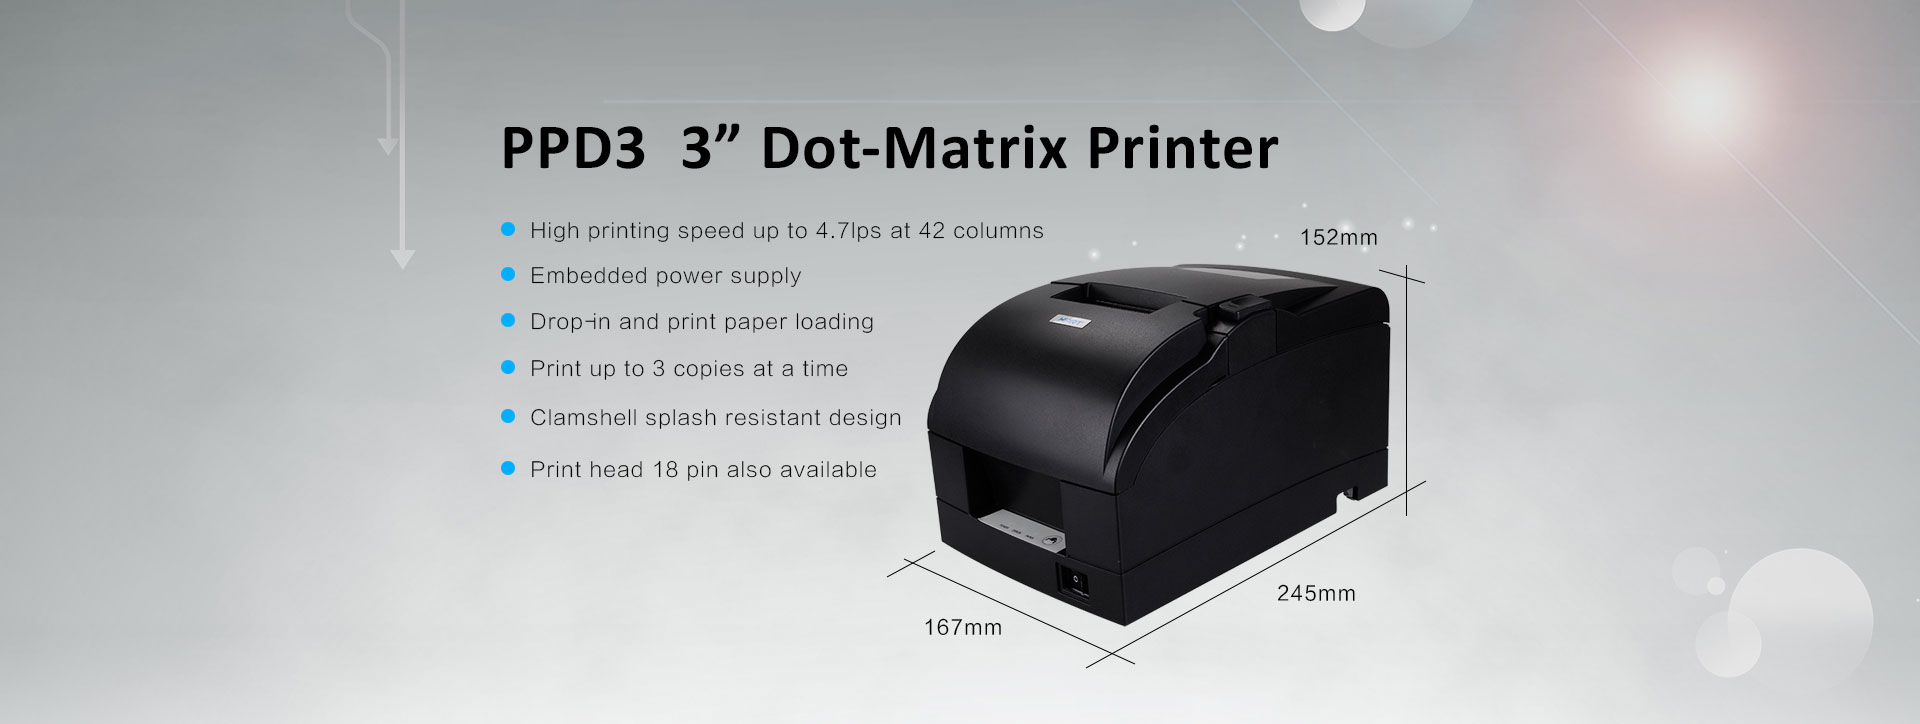 Best Dot Matrix Printers